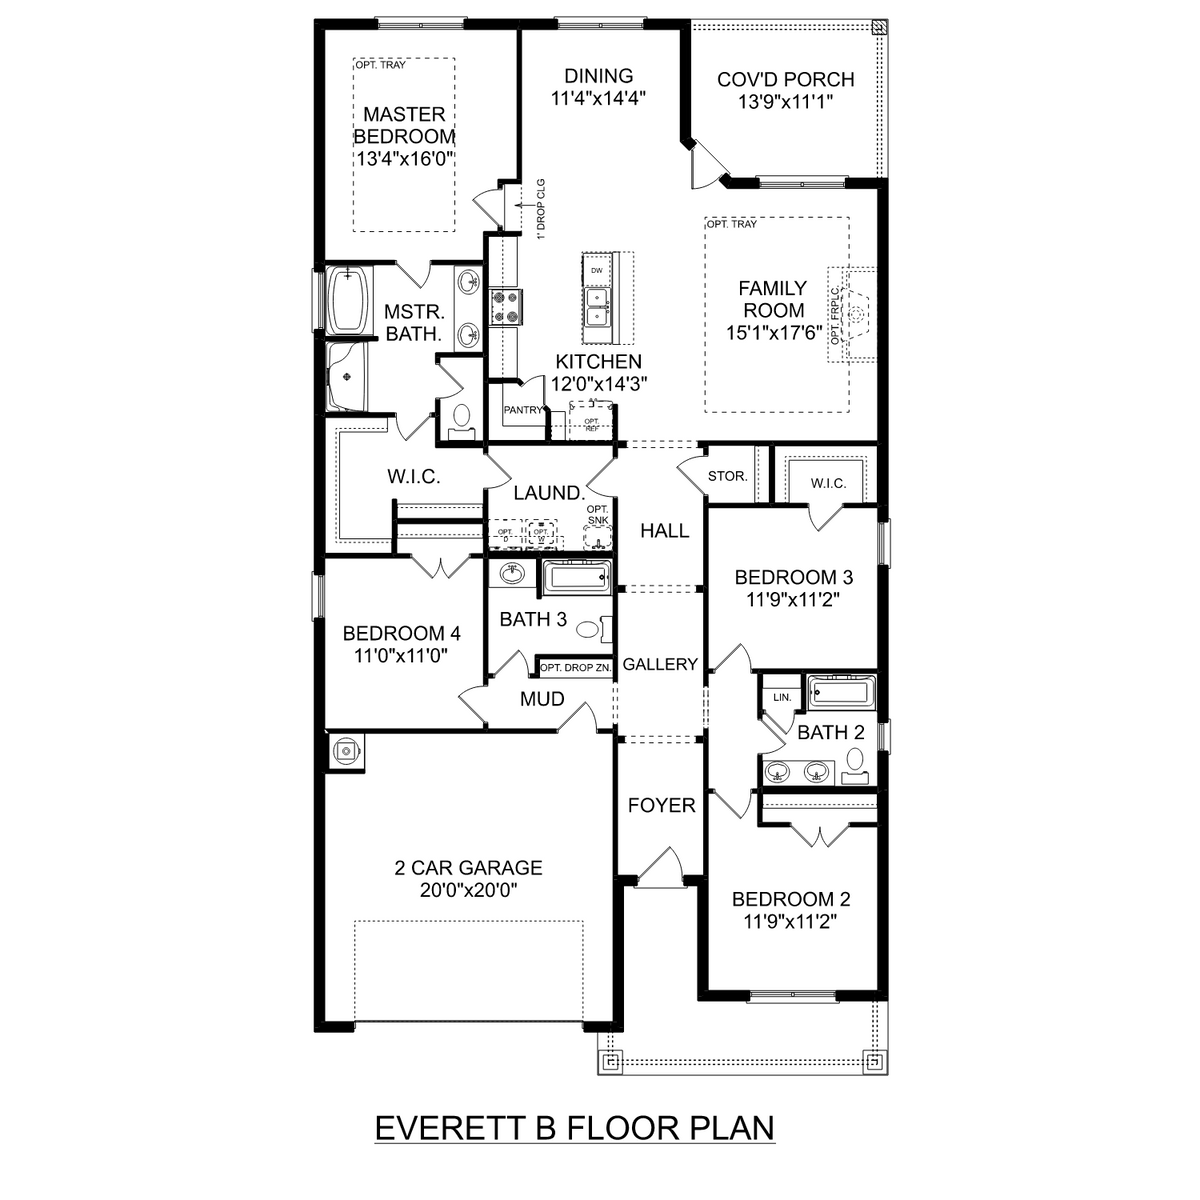 1 - The Everett B floor plan layout for 27249 Mckenna Drive in Davidson Homes' Mallard Landing community.